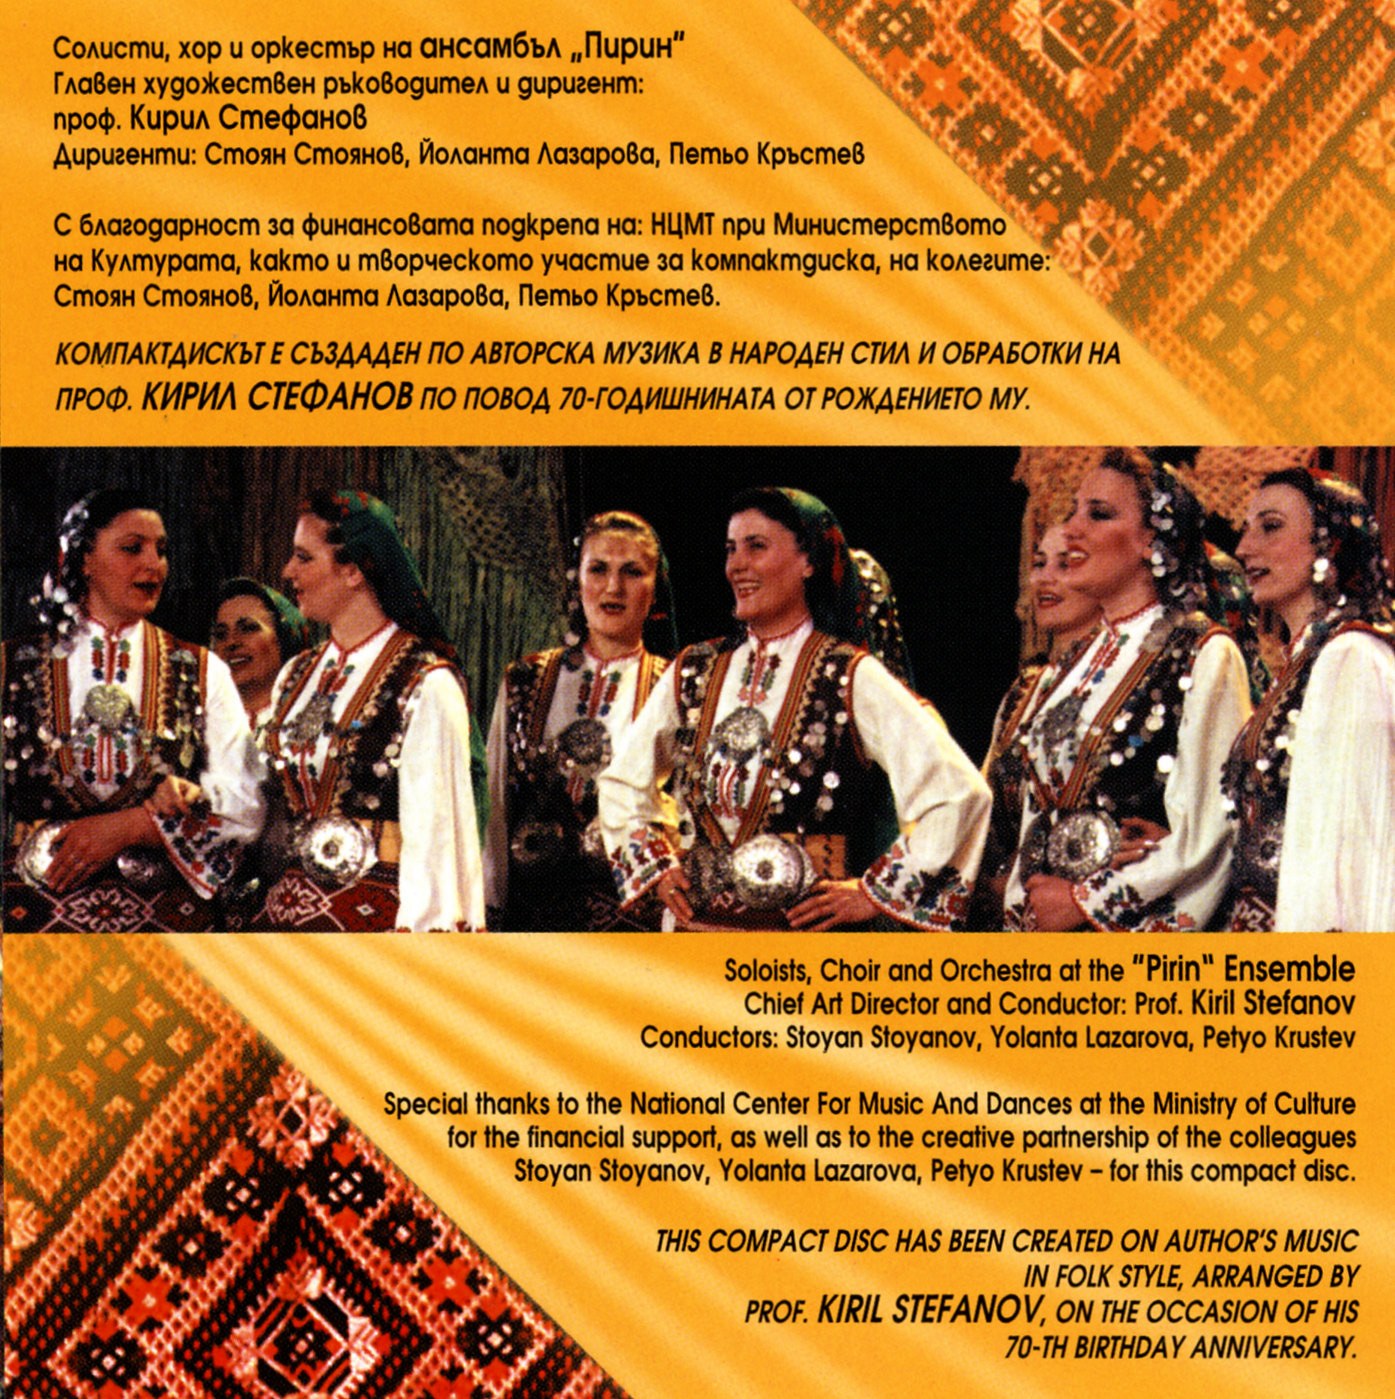 Zapei, zemya. Pirin Bulgarian Folk Ensemble. Kiril Stefanov